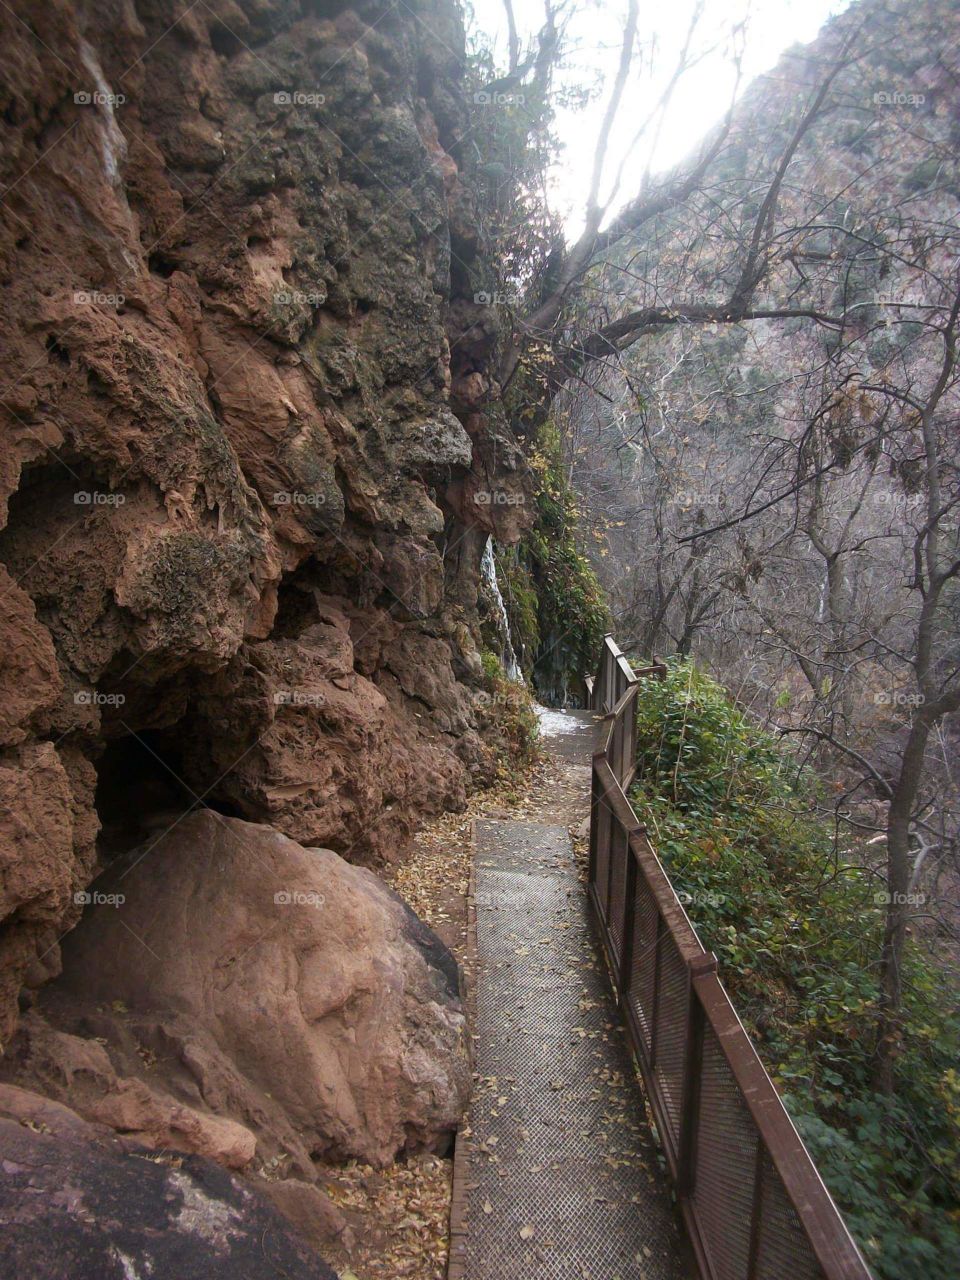 A nice, scenic trail at Tonto Park in Colorado